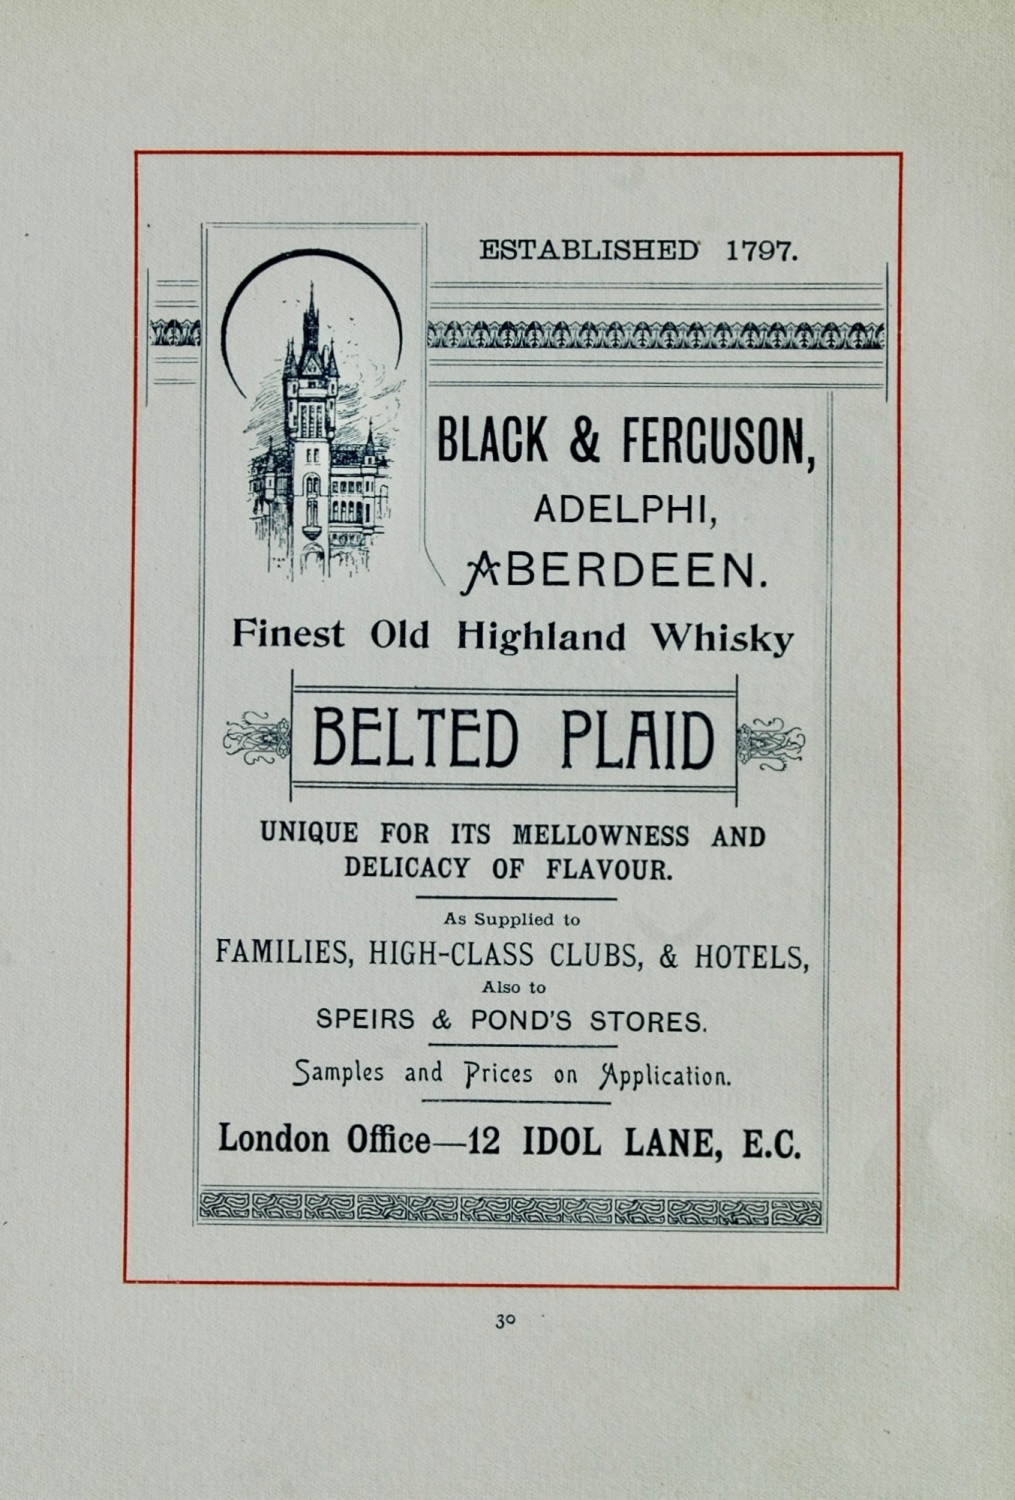 Black & Ferguson, Adelphi, Aberdeen,  Finest Old Highland Whisky 